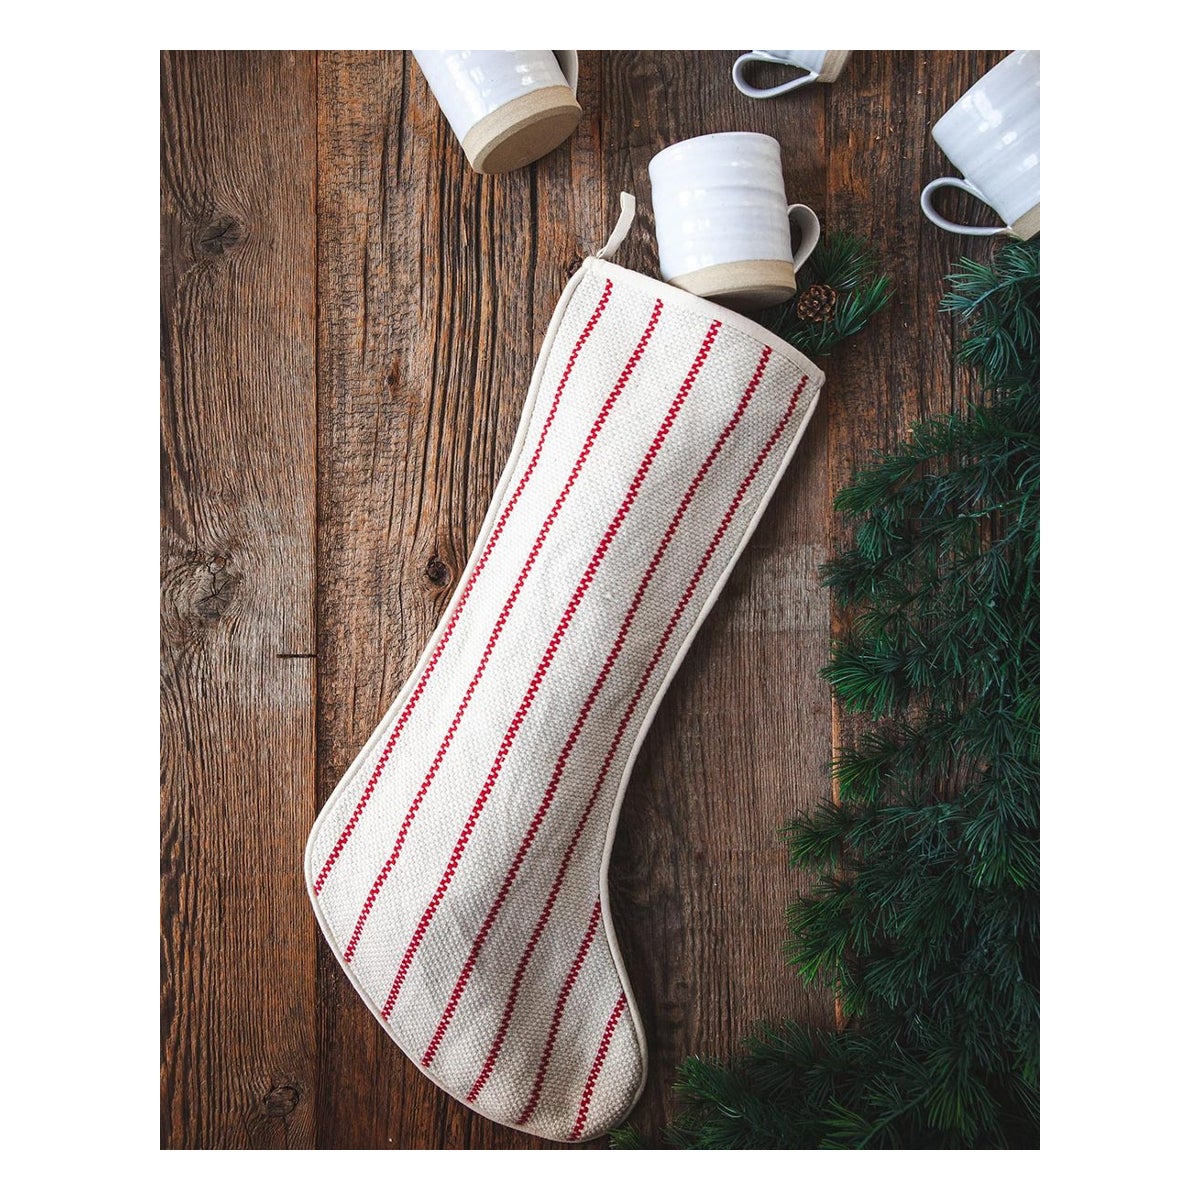 Best Christmas Stockings Option: Farmhouse Pottery Maine Weave Stocking